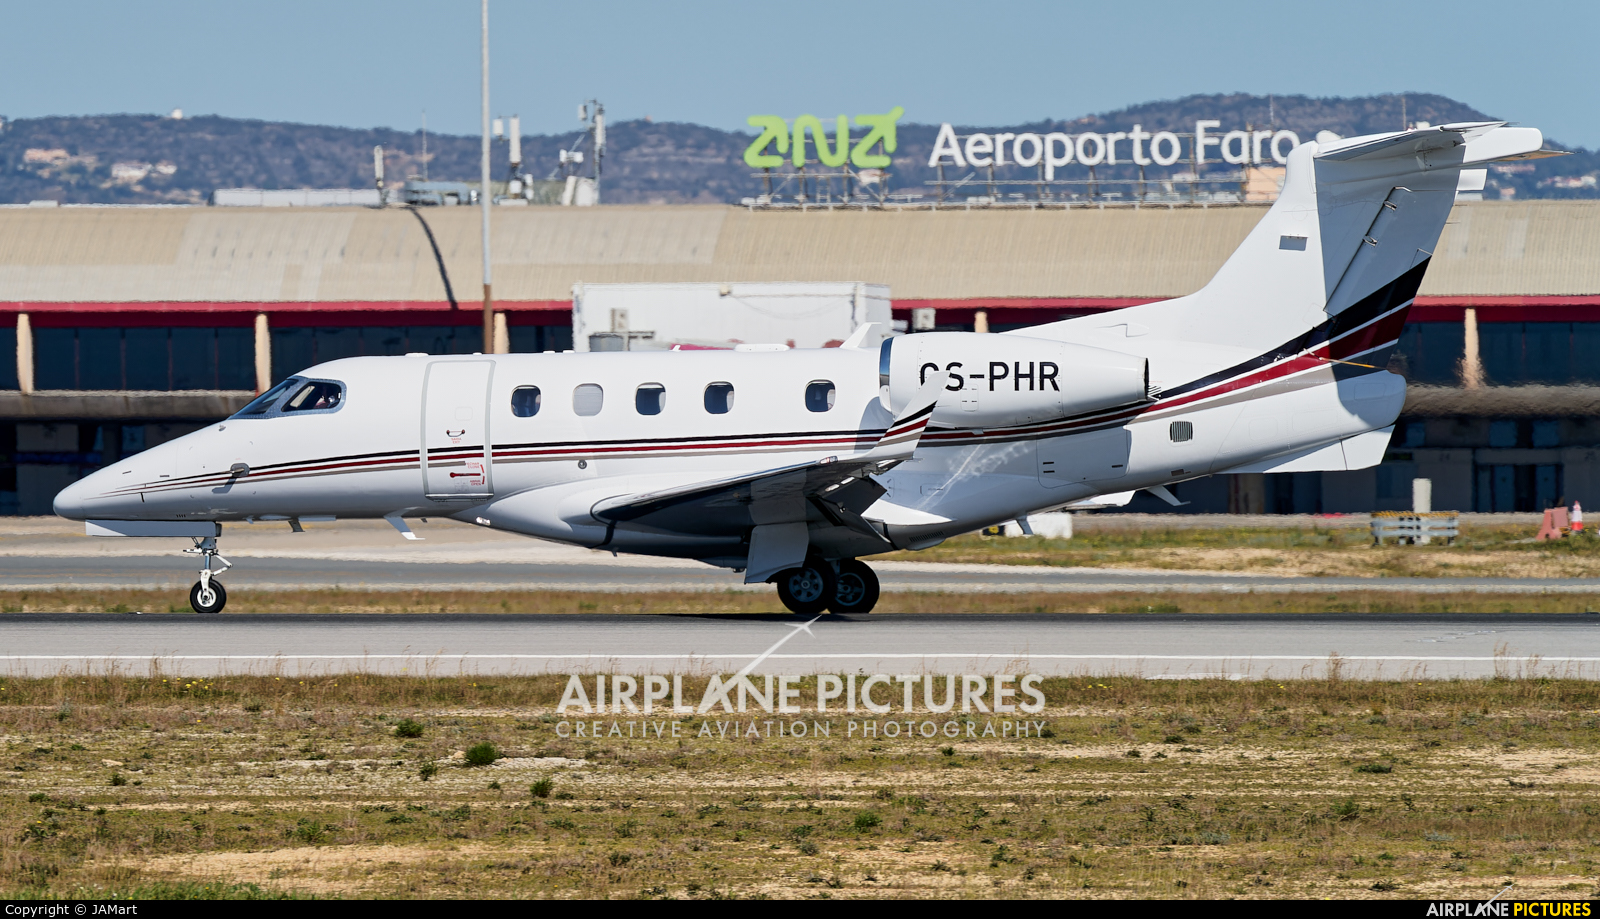 NetJets Europe (Portugal) CS-PHR aircraft at Faro